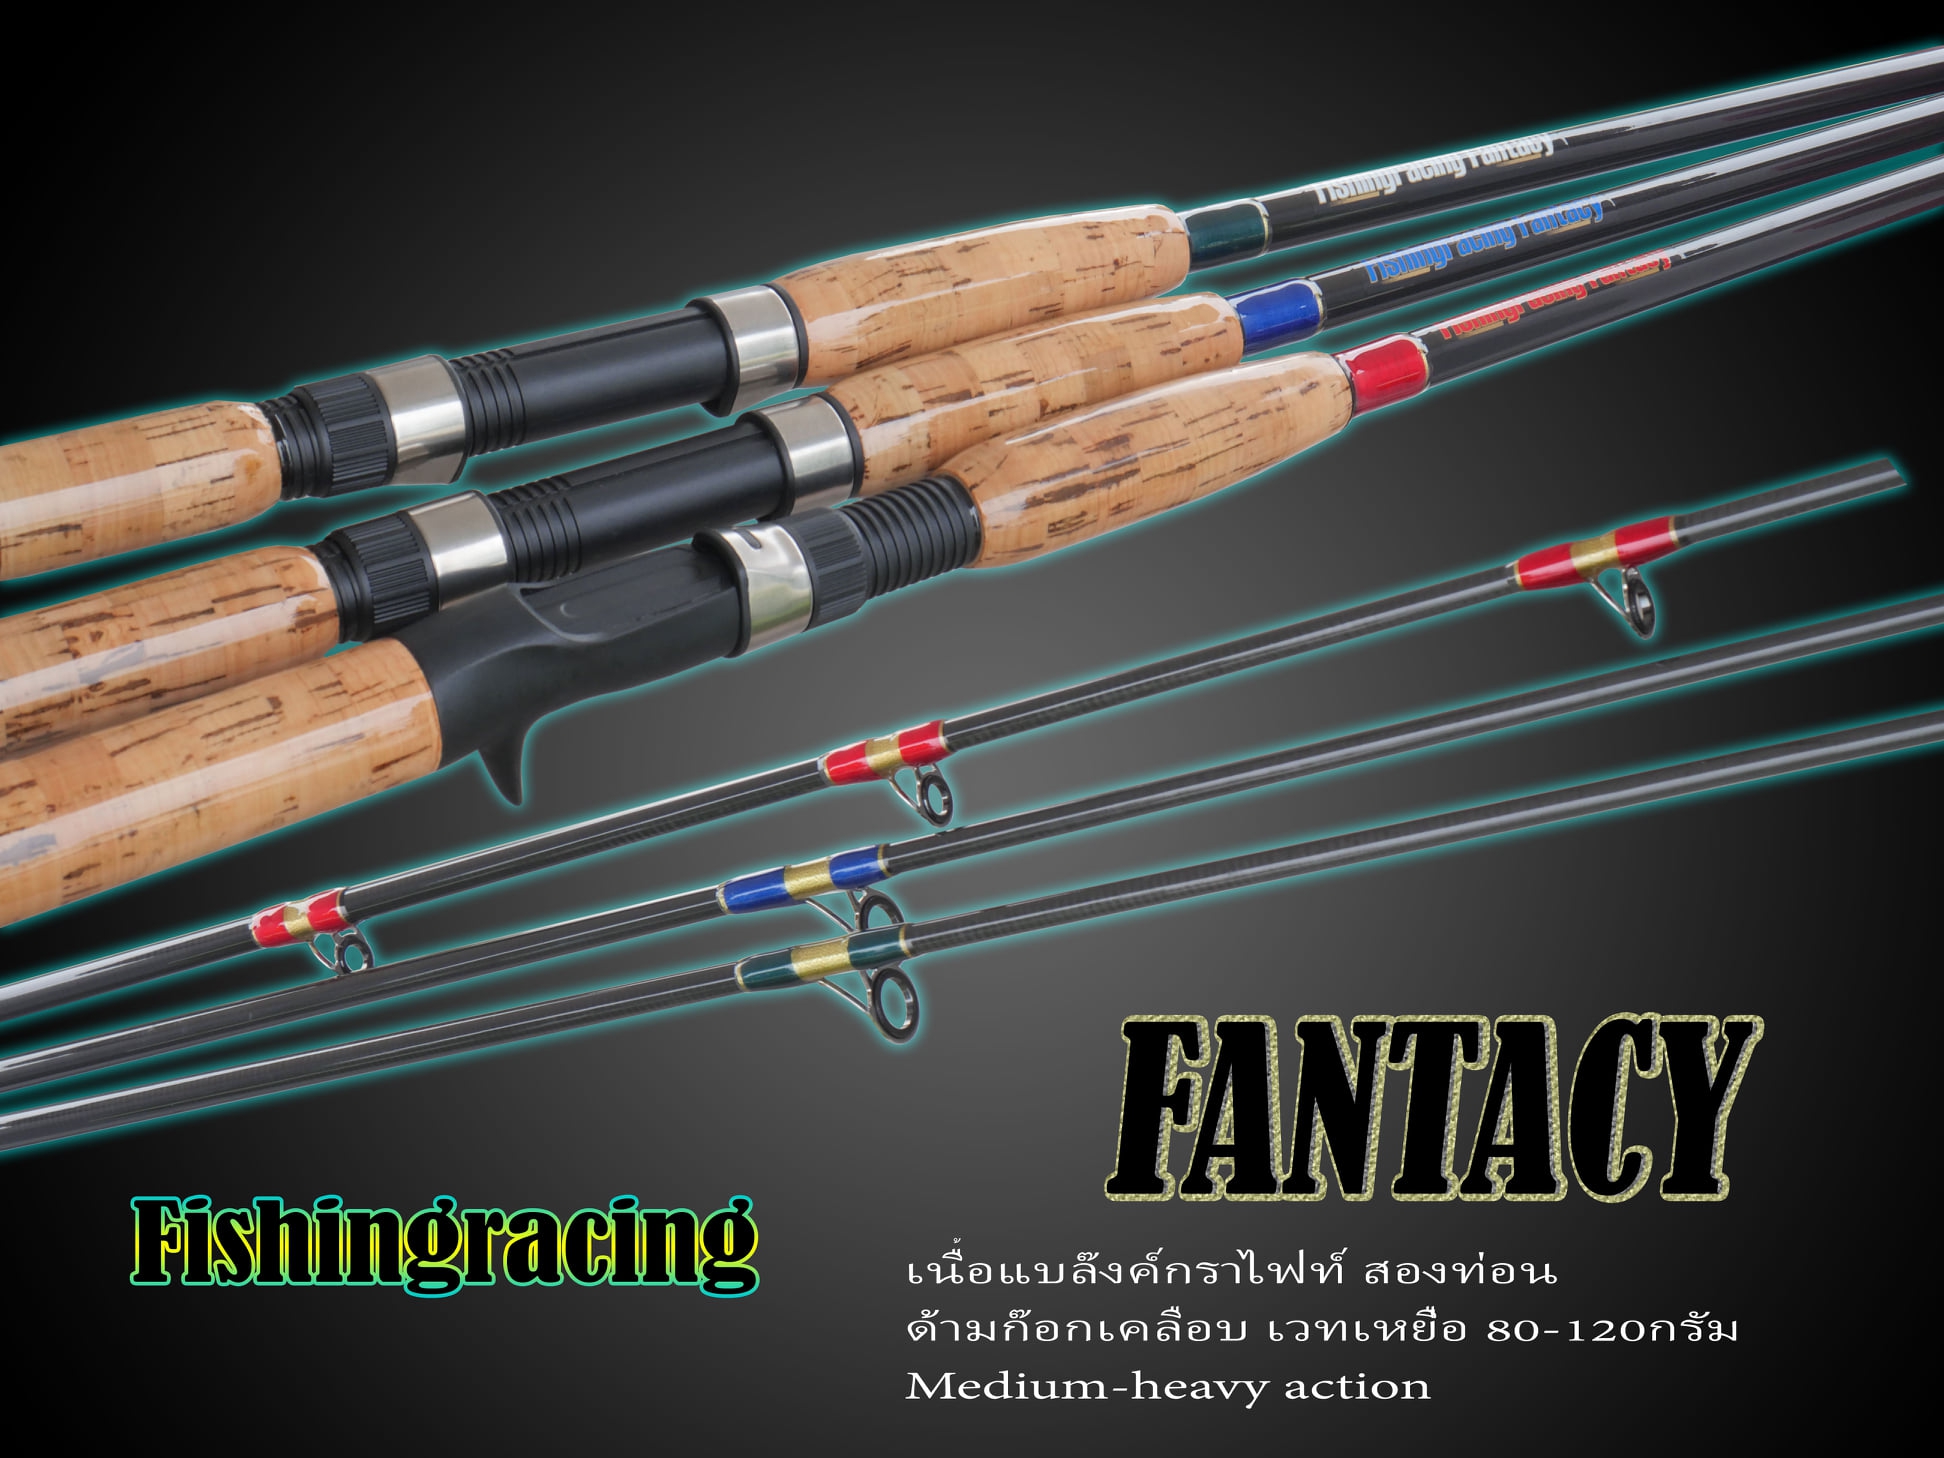 Fishingracing Fantacy #FTS1002*Green (Spinning) - 7 SEAS PROSHOP (THAILAND)